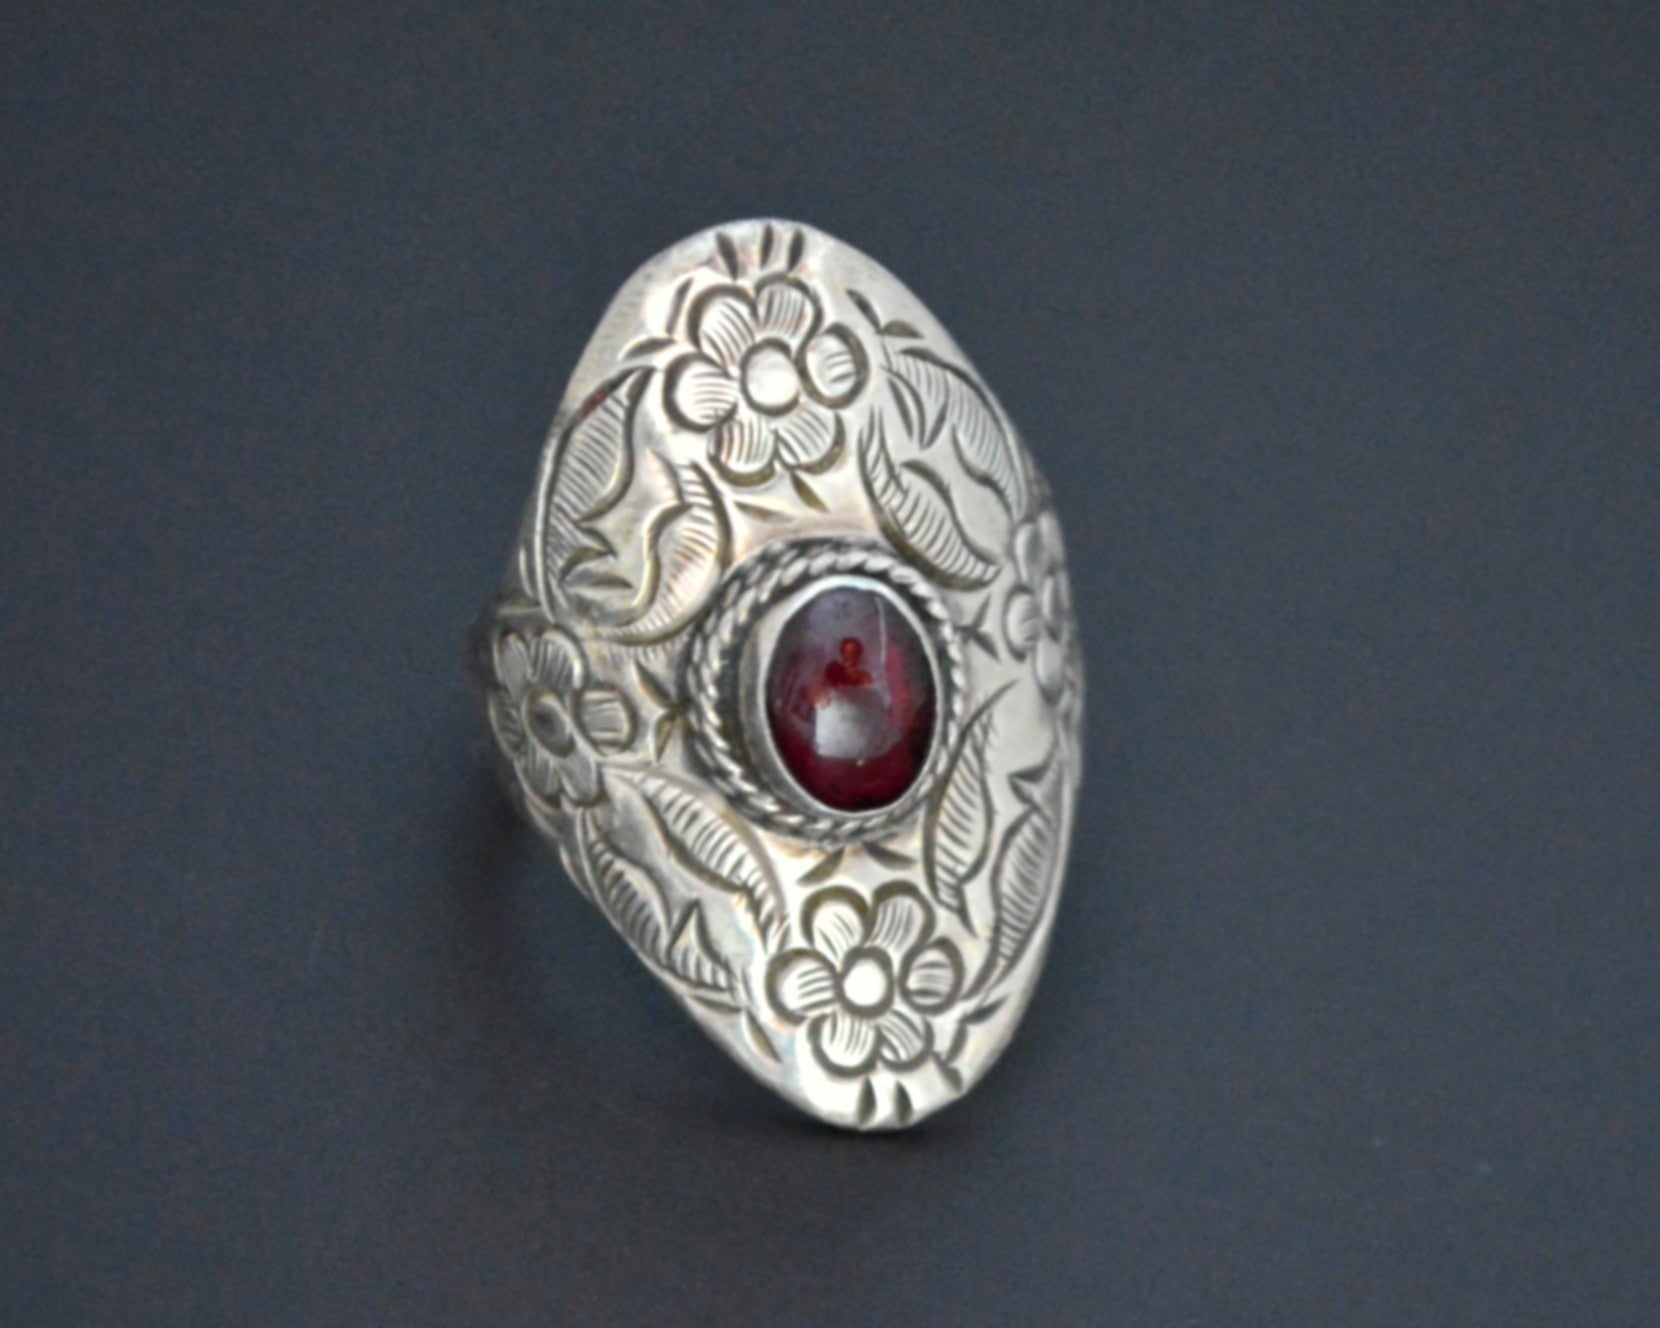 Nepali Silver Garnet Ring - Size 9